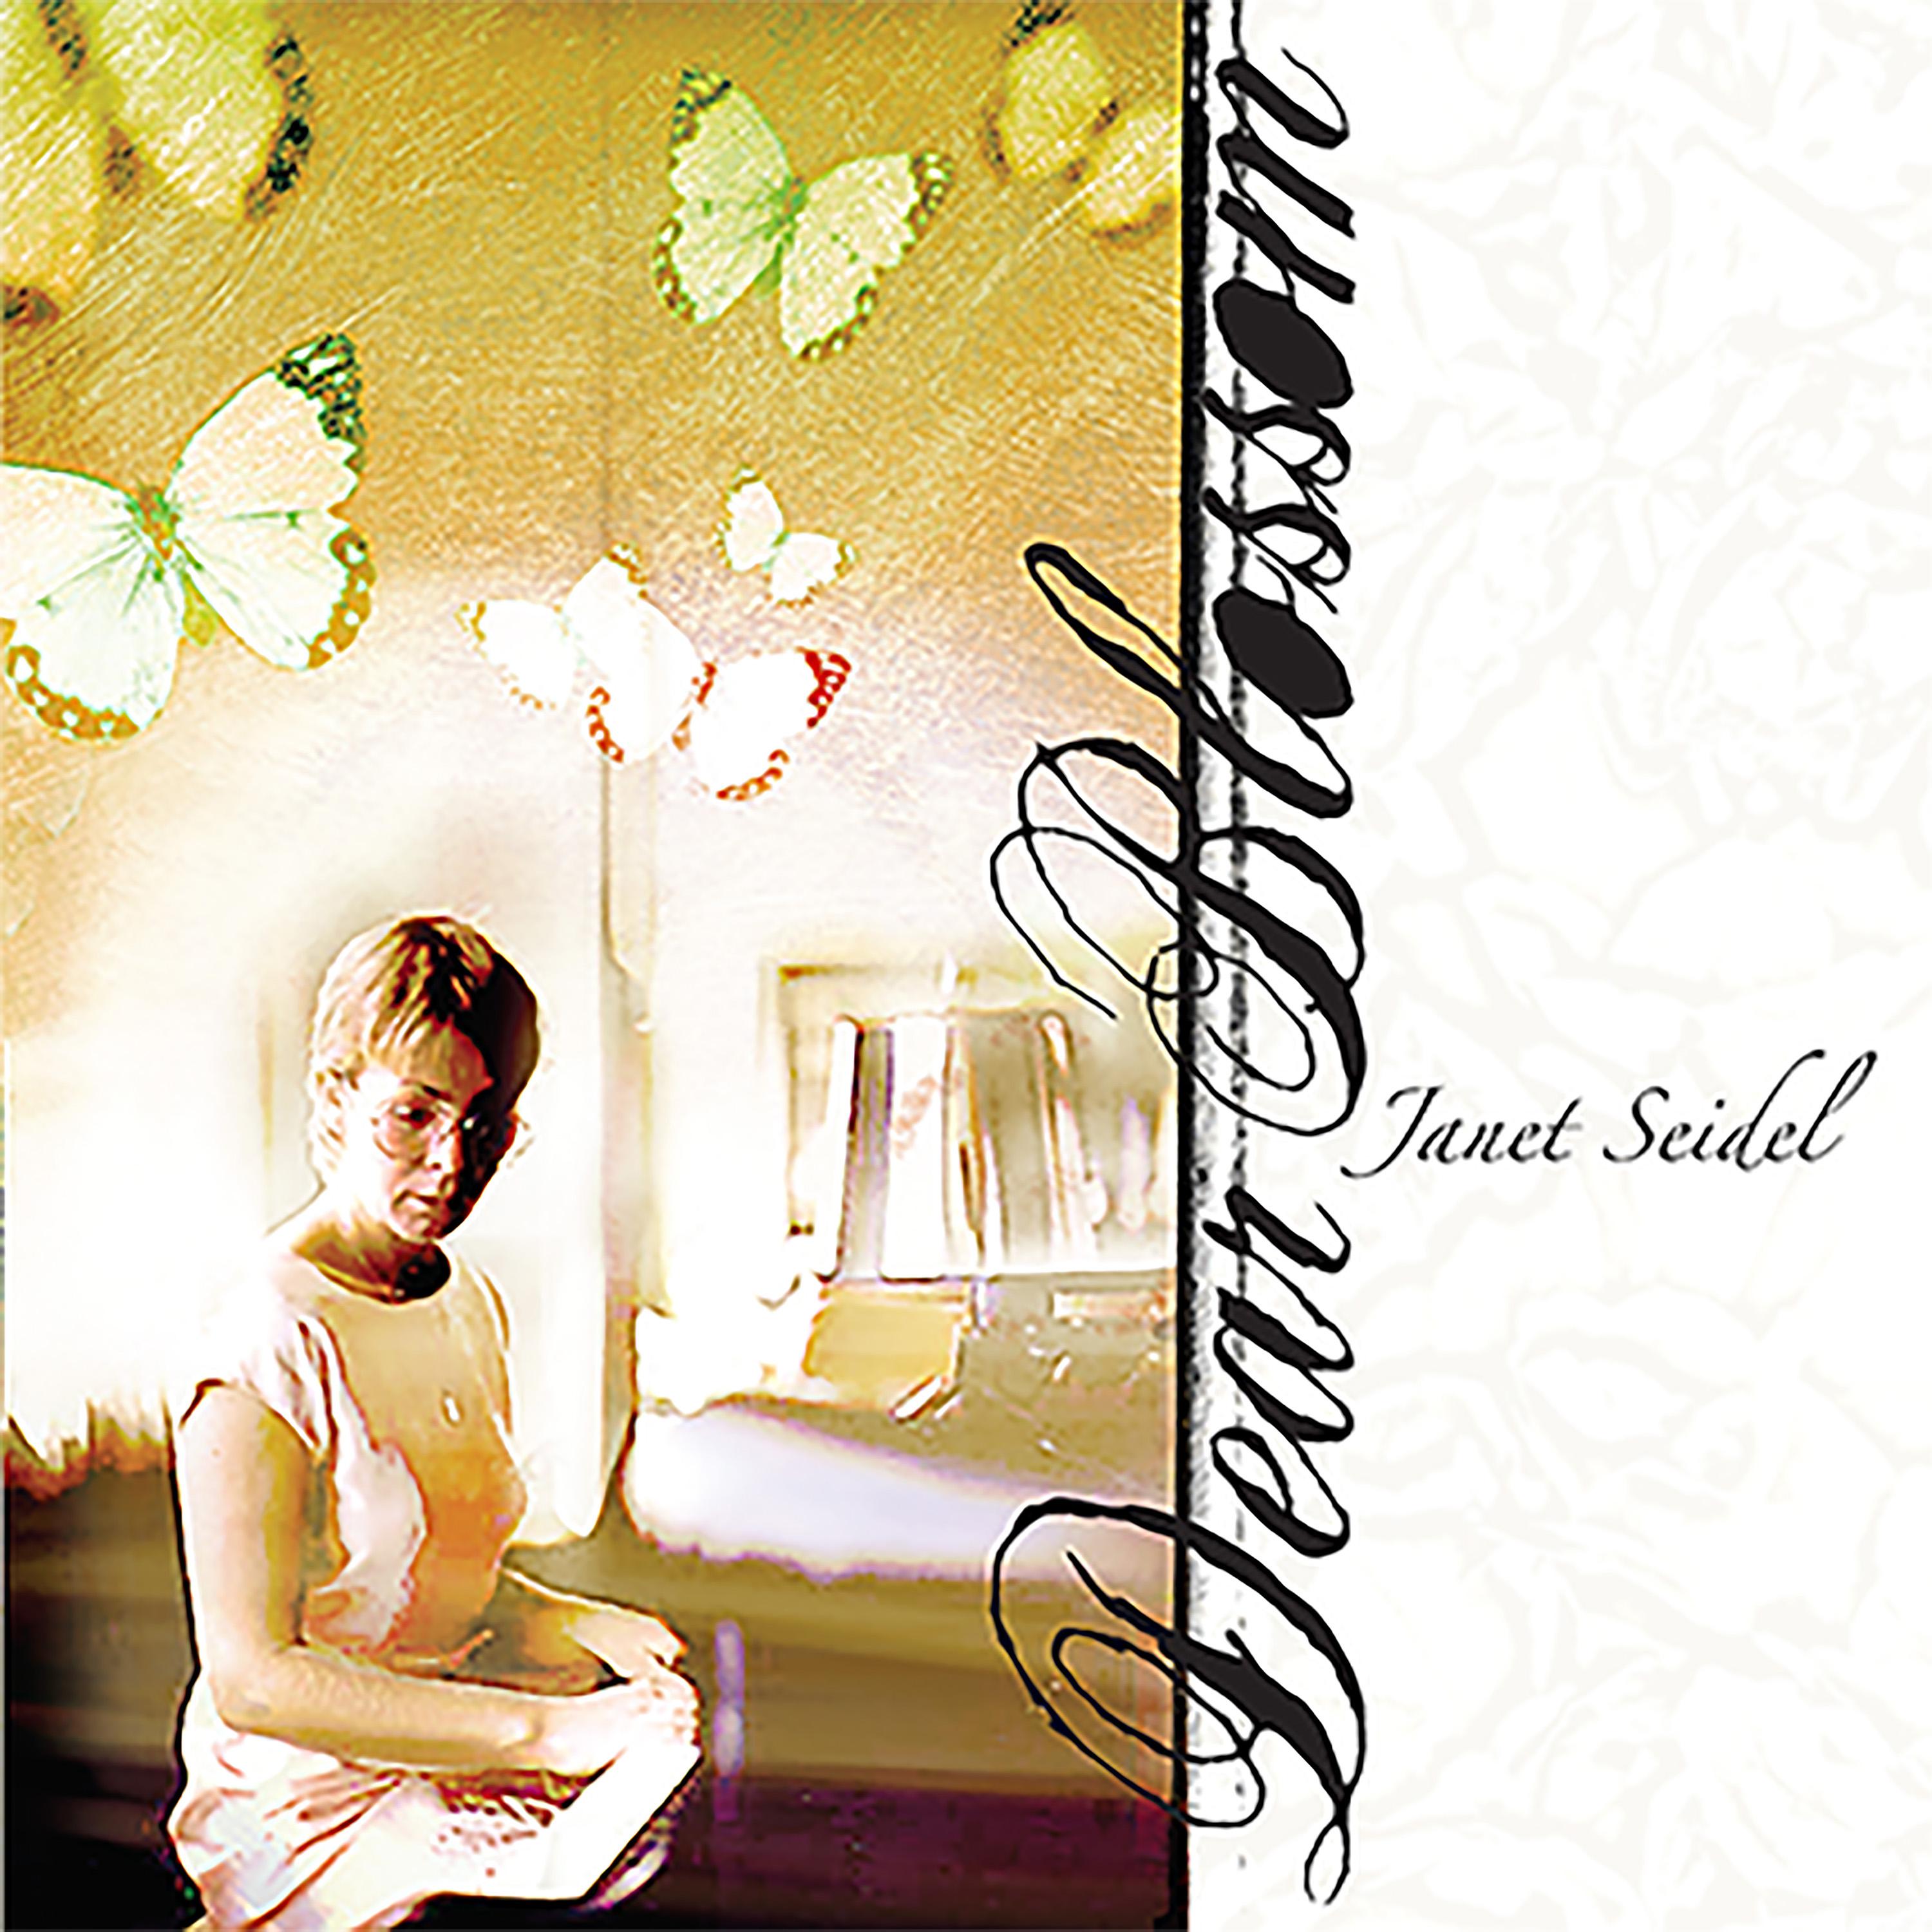 Janet Seidel - I'm Shadowing You